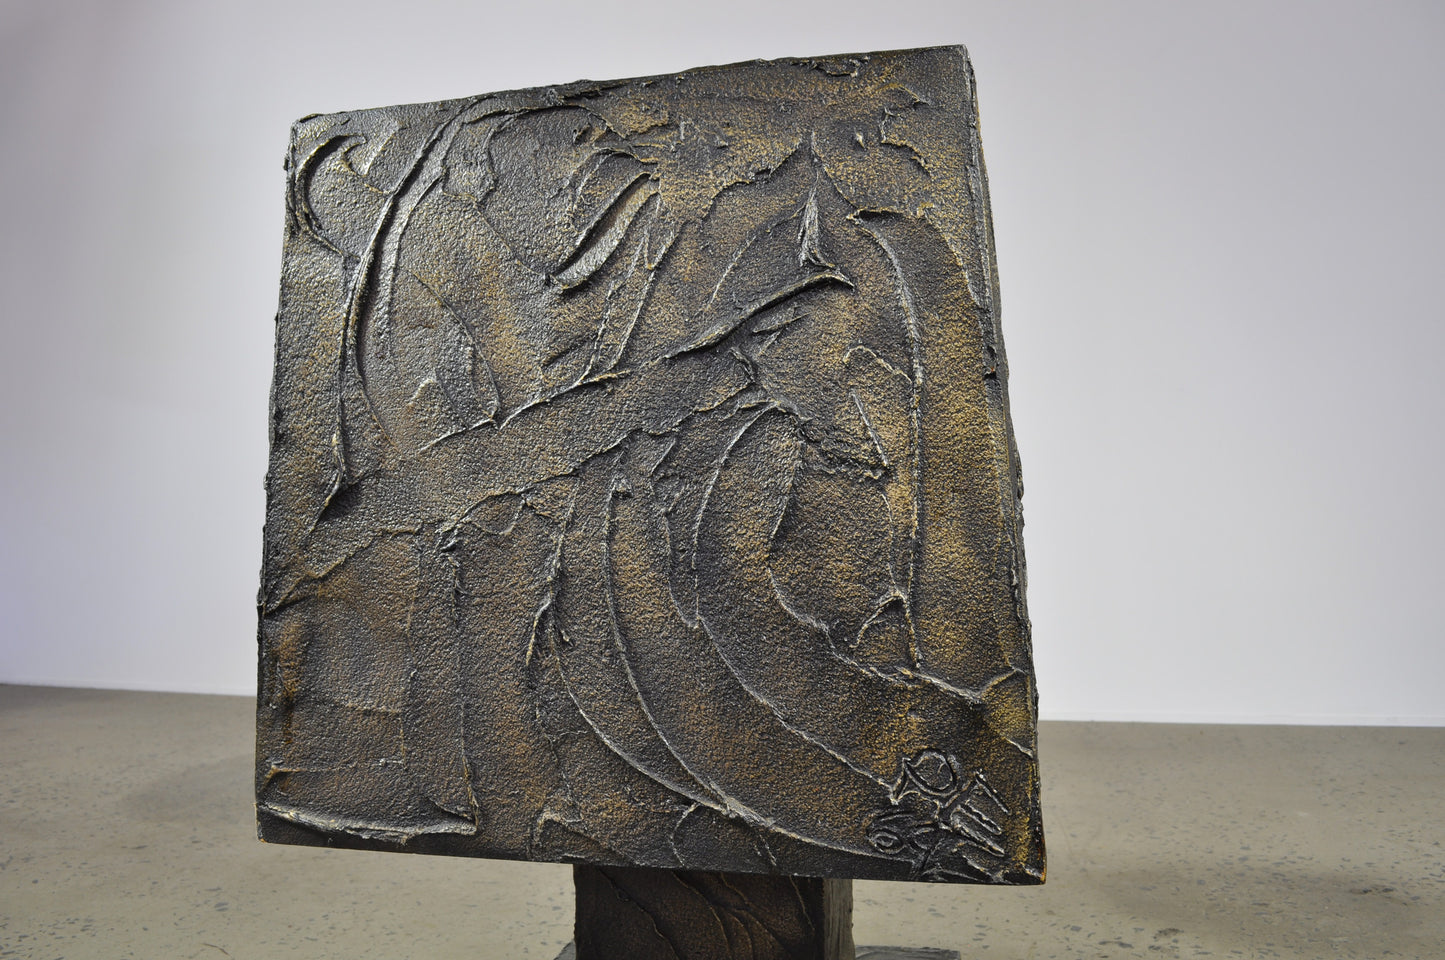 Paul Evans sculptured bronze chair